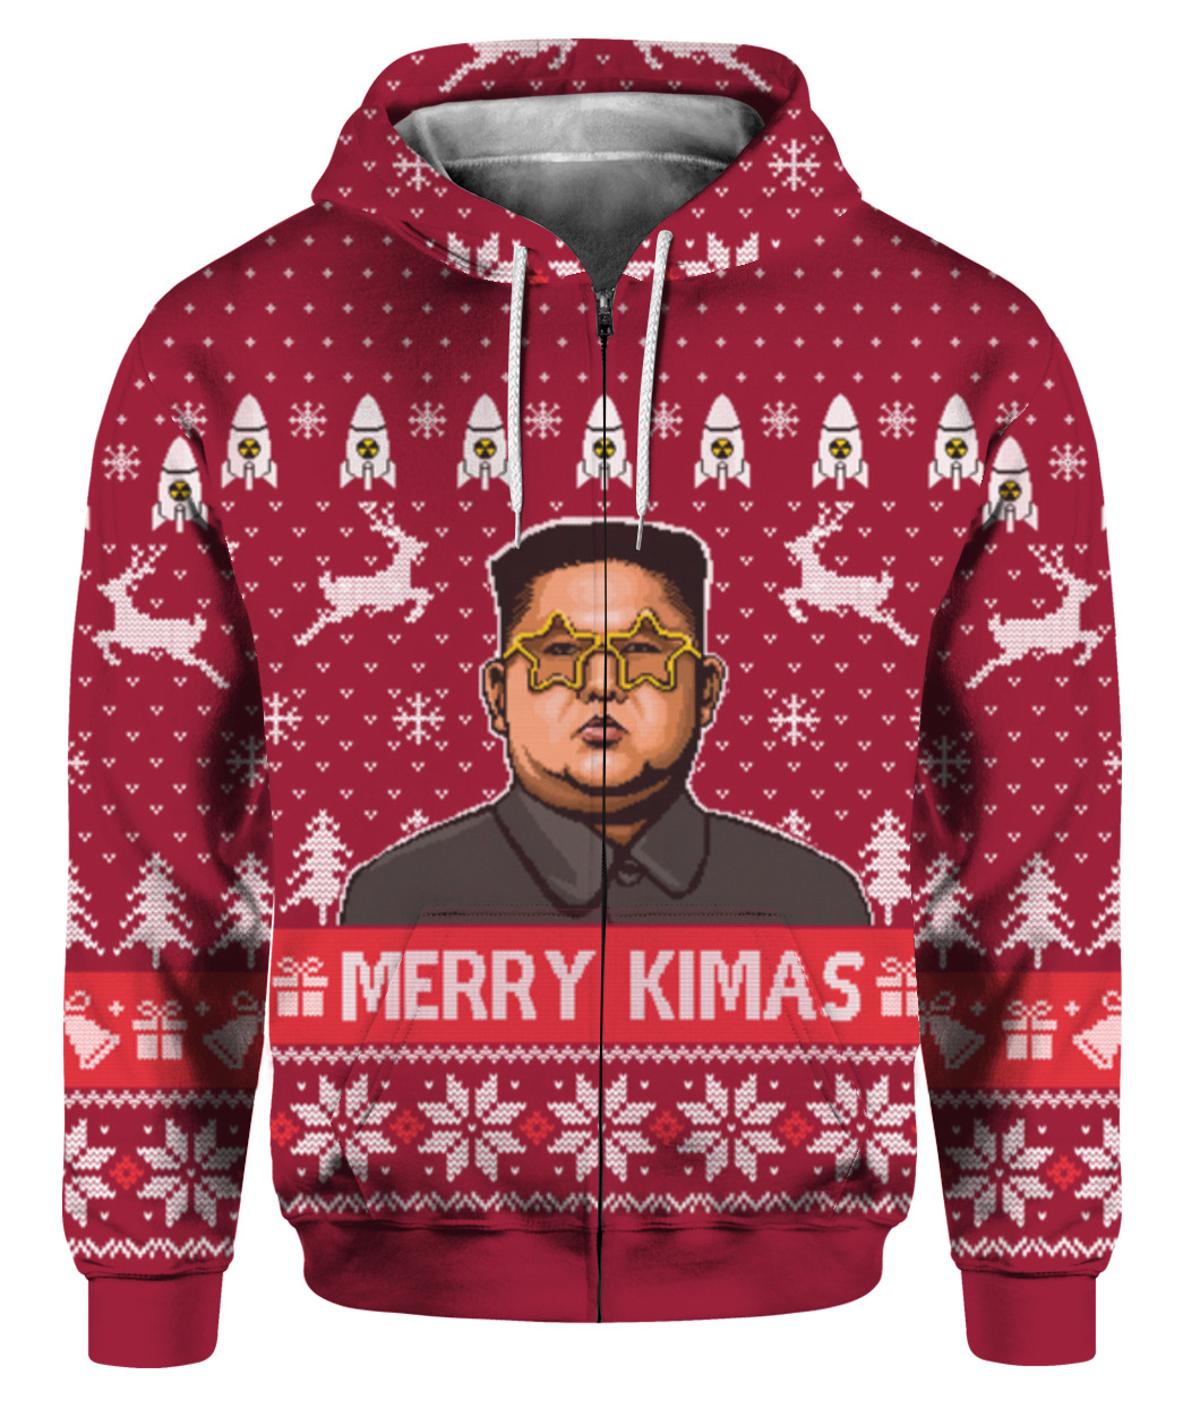 Lessbians Christmas Sweater